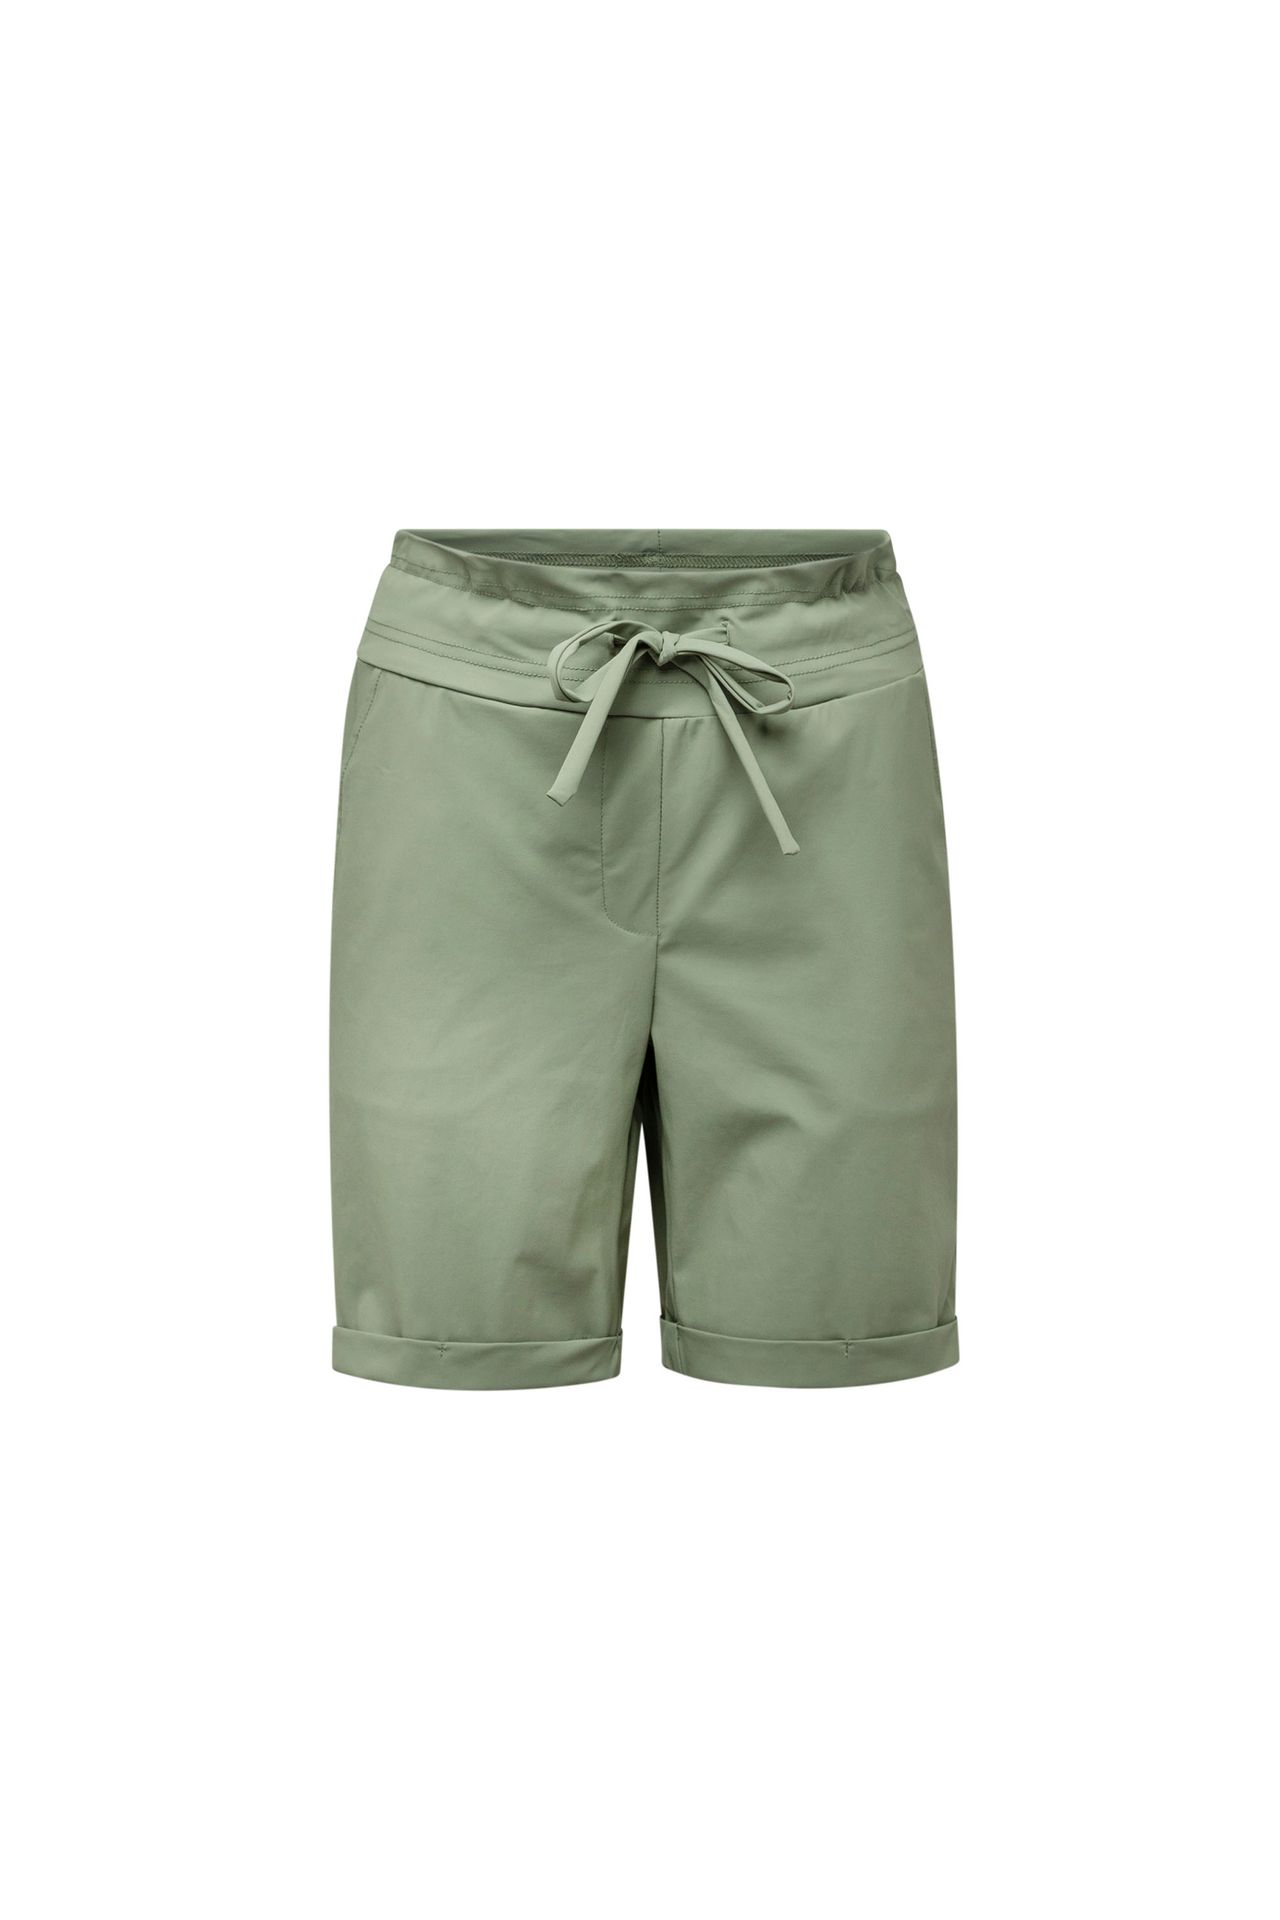  Groene korte broek travelstof green/grey 208870-540-48